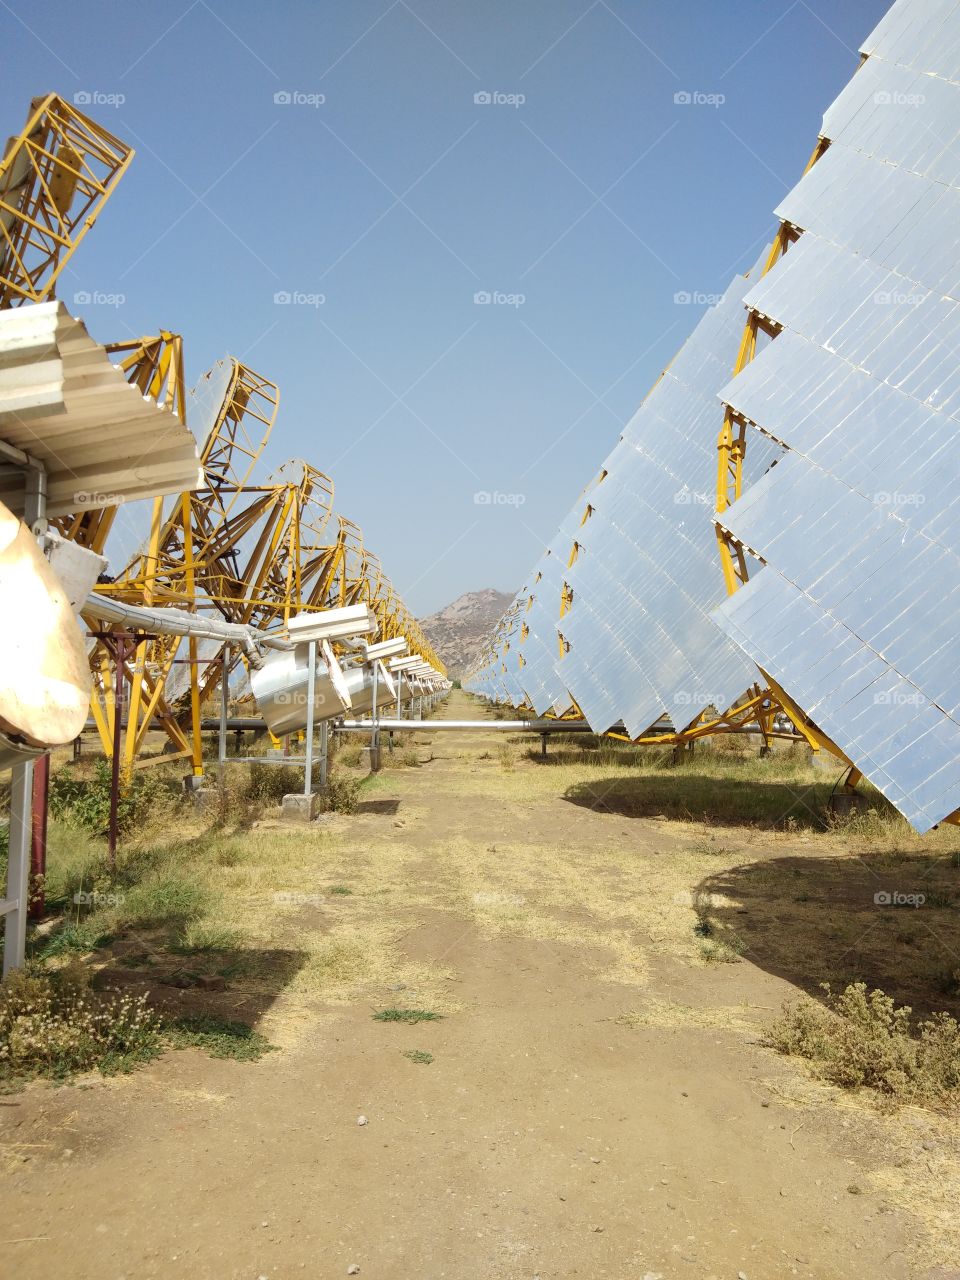 Solar Plant